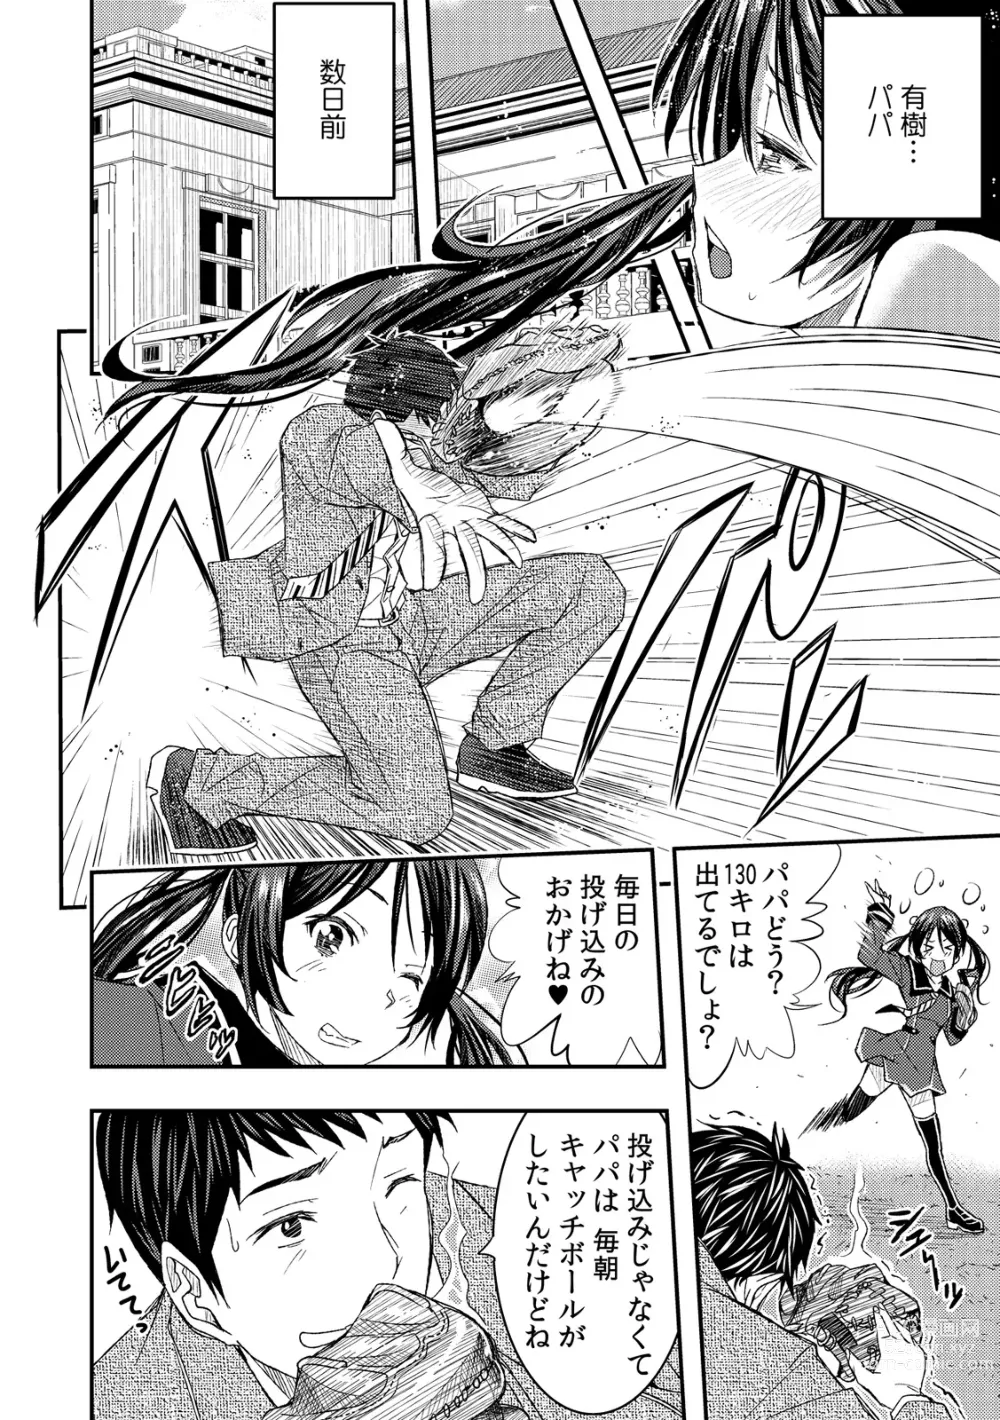 Page 6 of manga Fuuzoku Ittara Osananajimi ga Tsukkomareteita Ken ww 1-2 Full Color